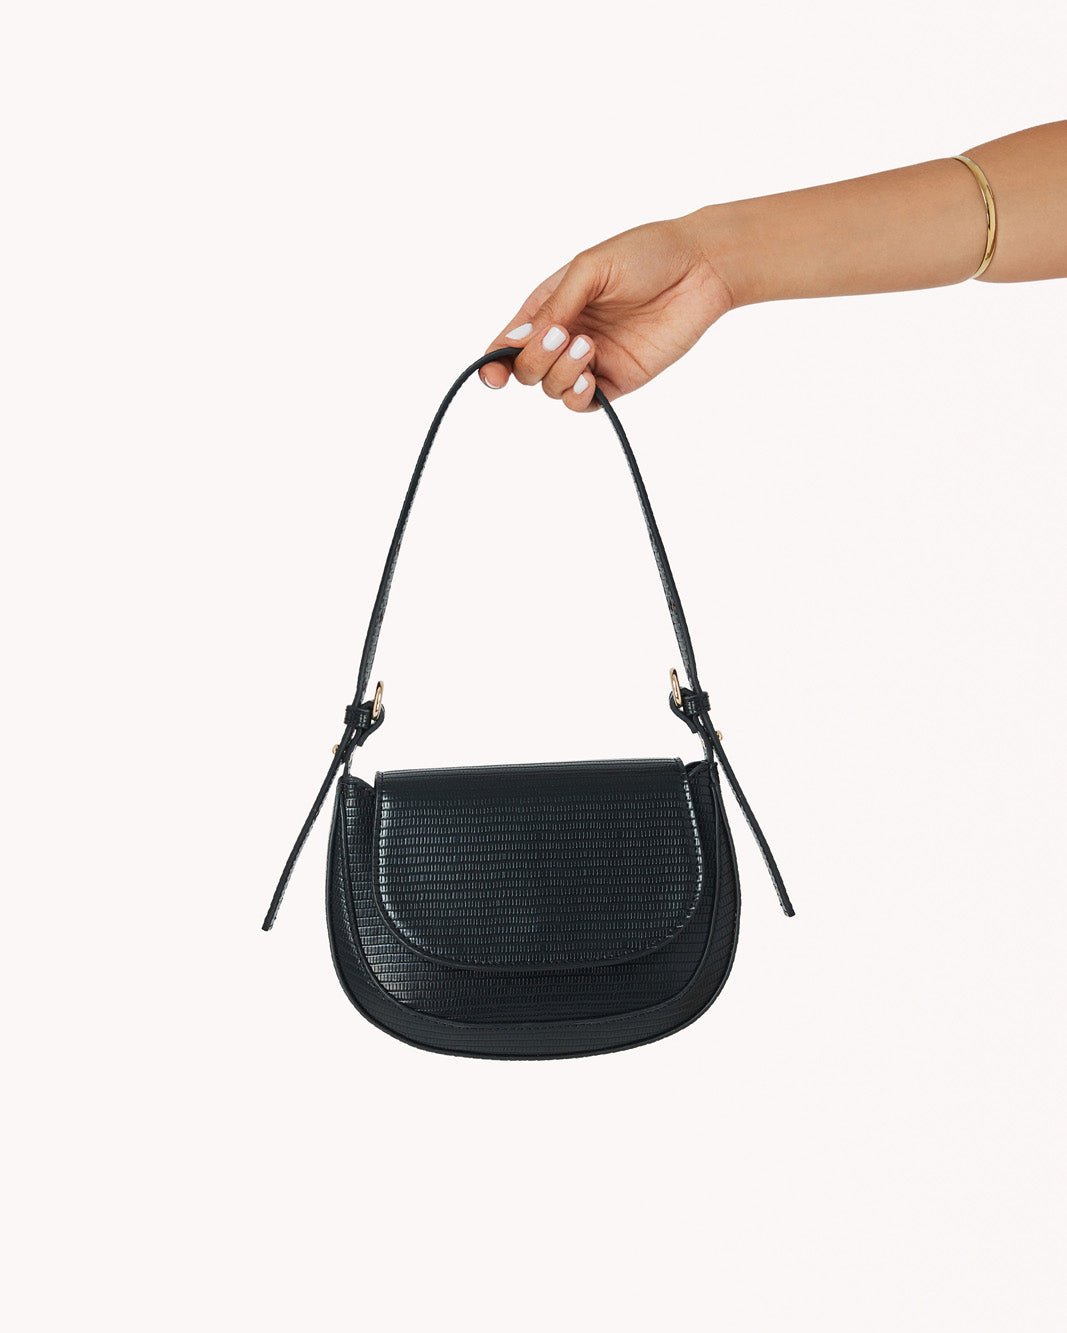 MEZRA SHOULDER BAG - BLACK SCALE-Handbags-Billini--Billini